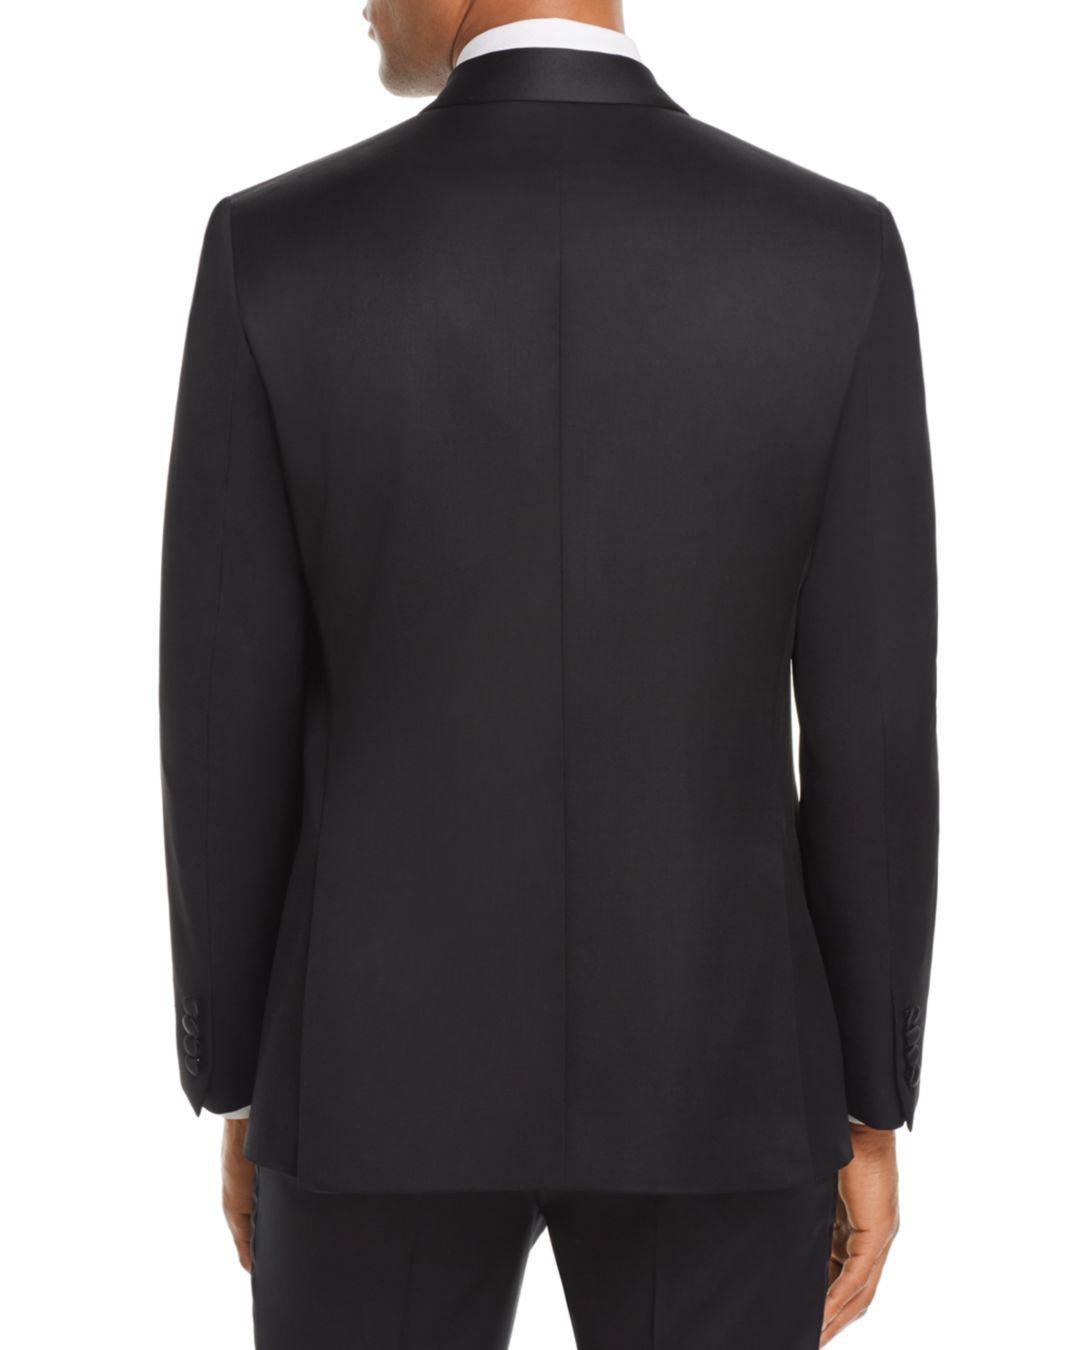 Ted Baker Josh Shawl Lapel Slim Fit Tuxedo Jacket in Black for Men - Lyst